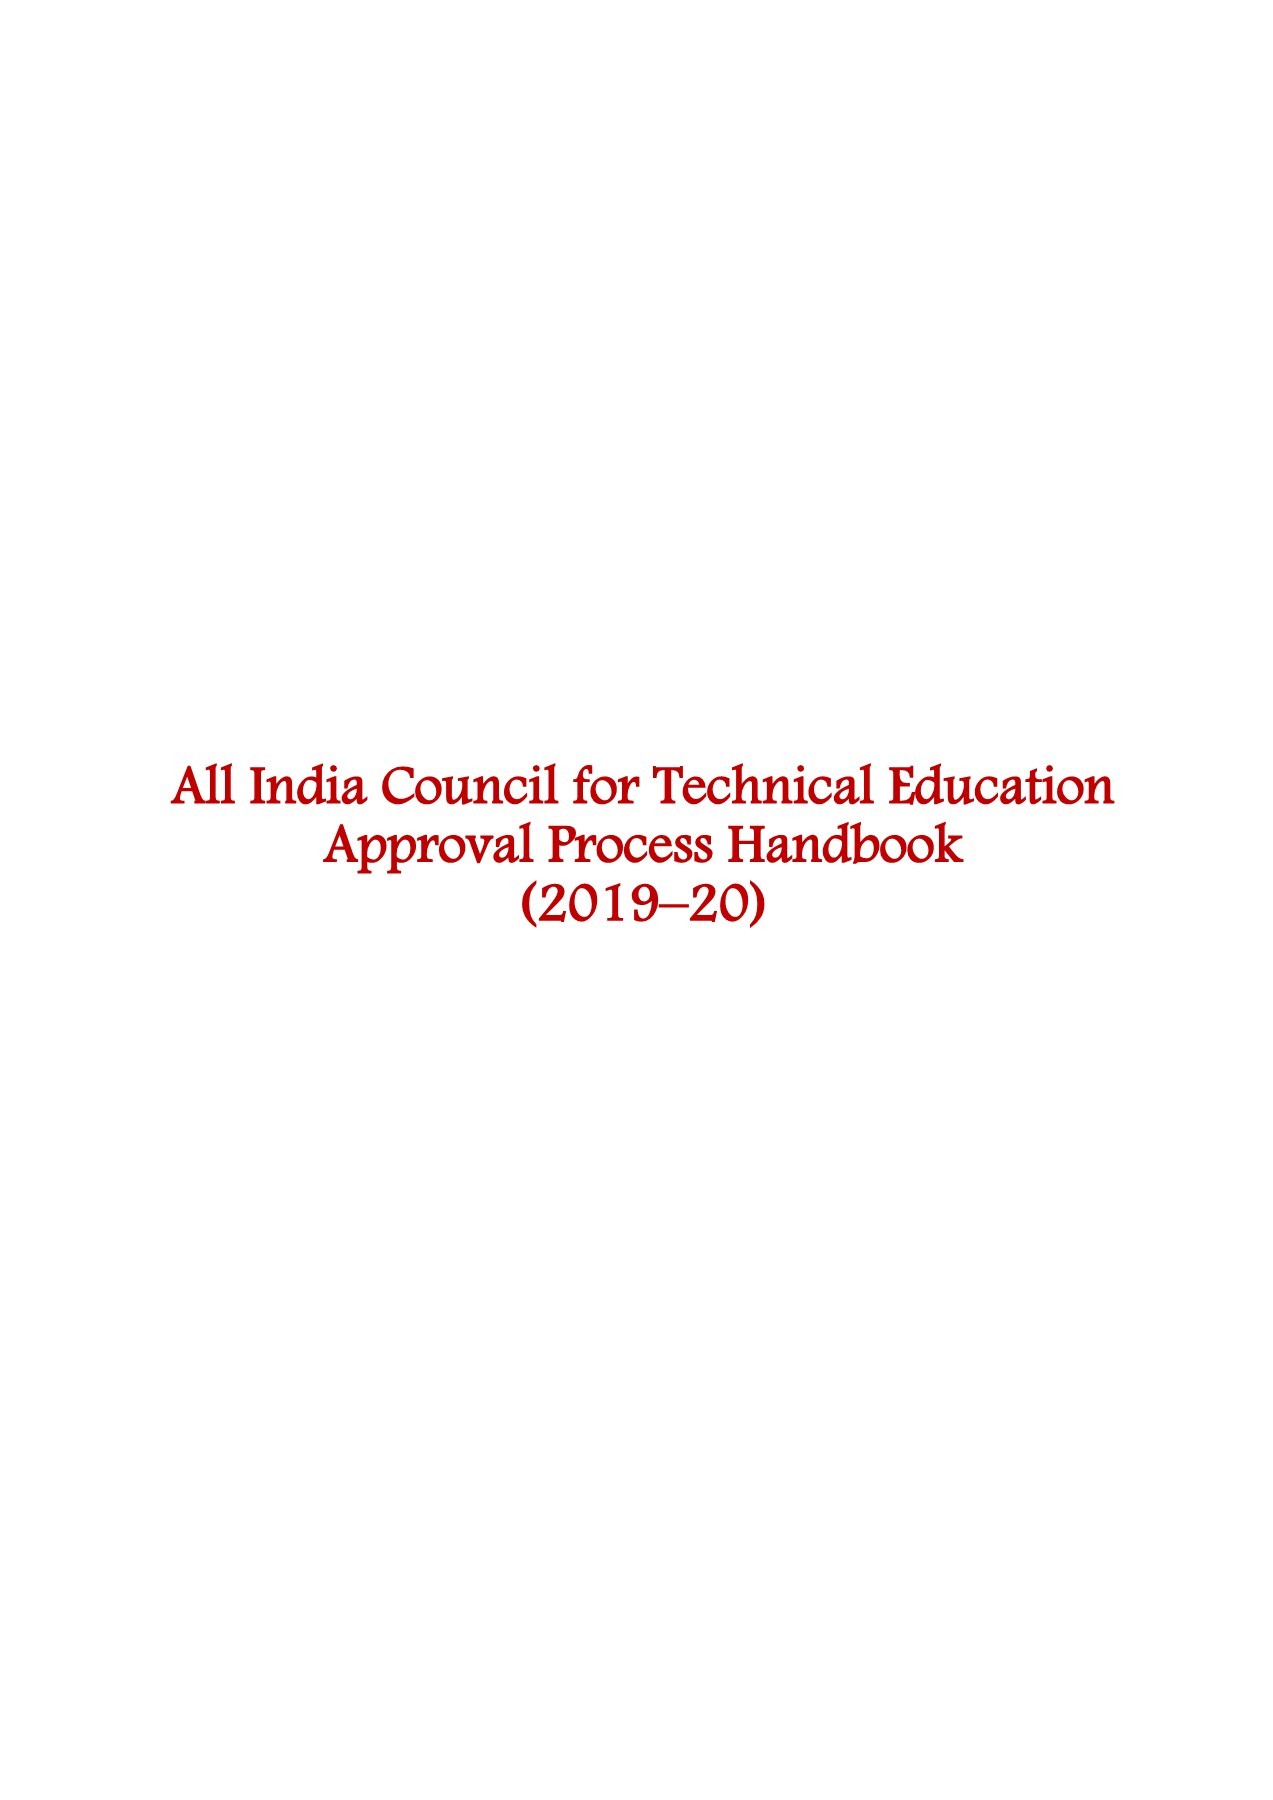 Aicte approval process handbook 2019-20 pdf